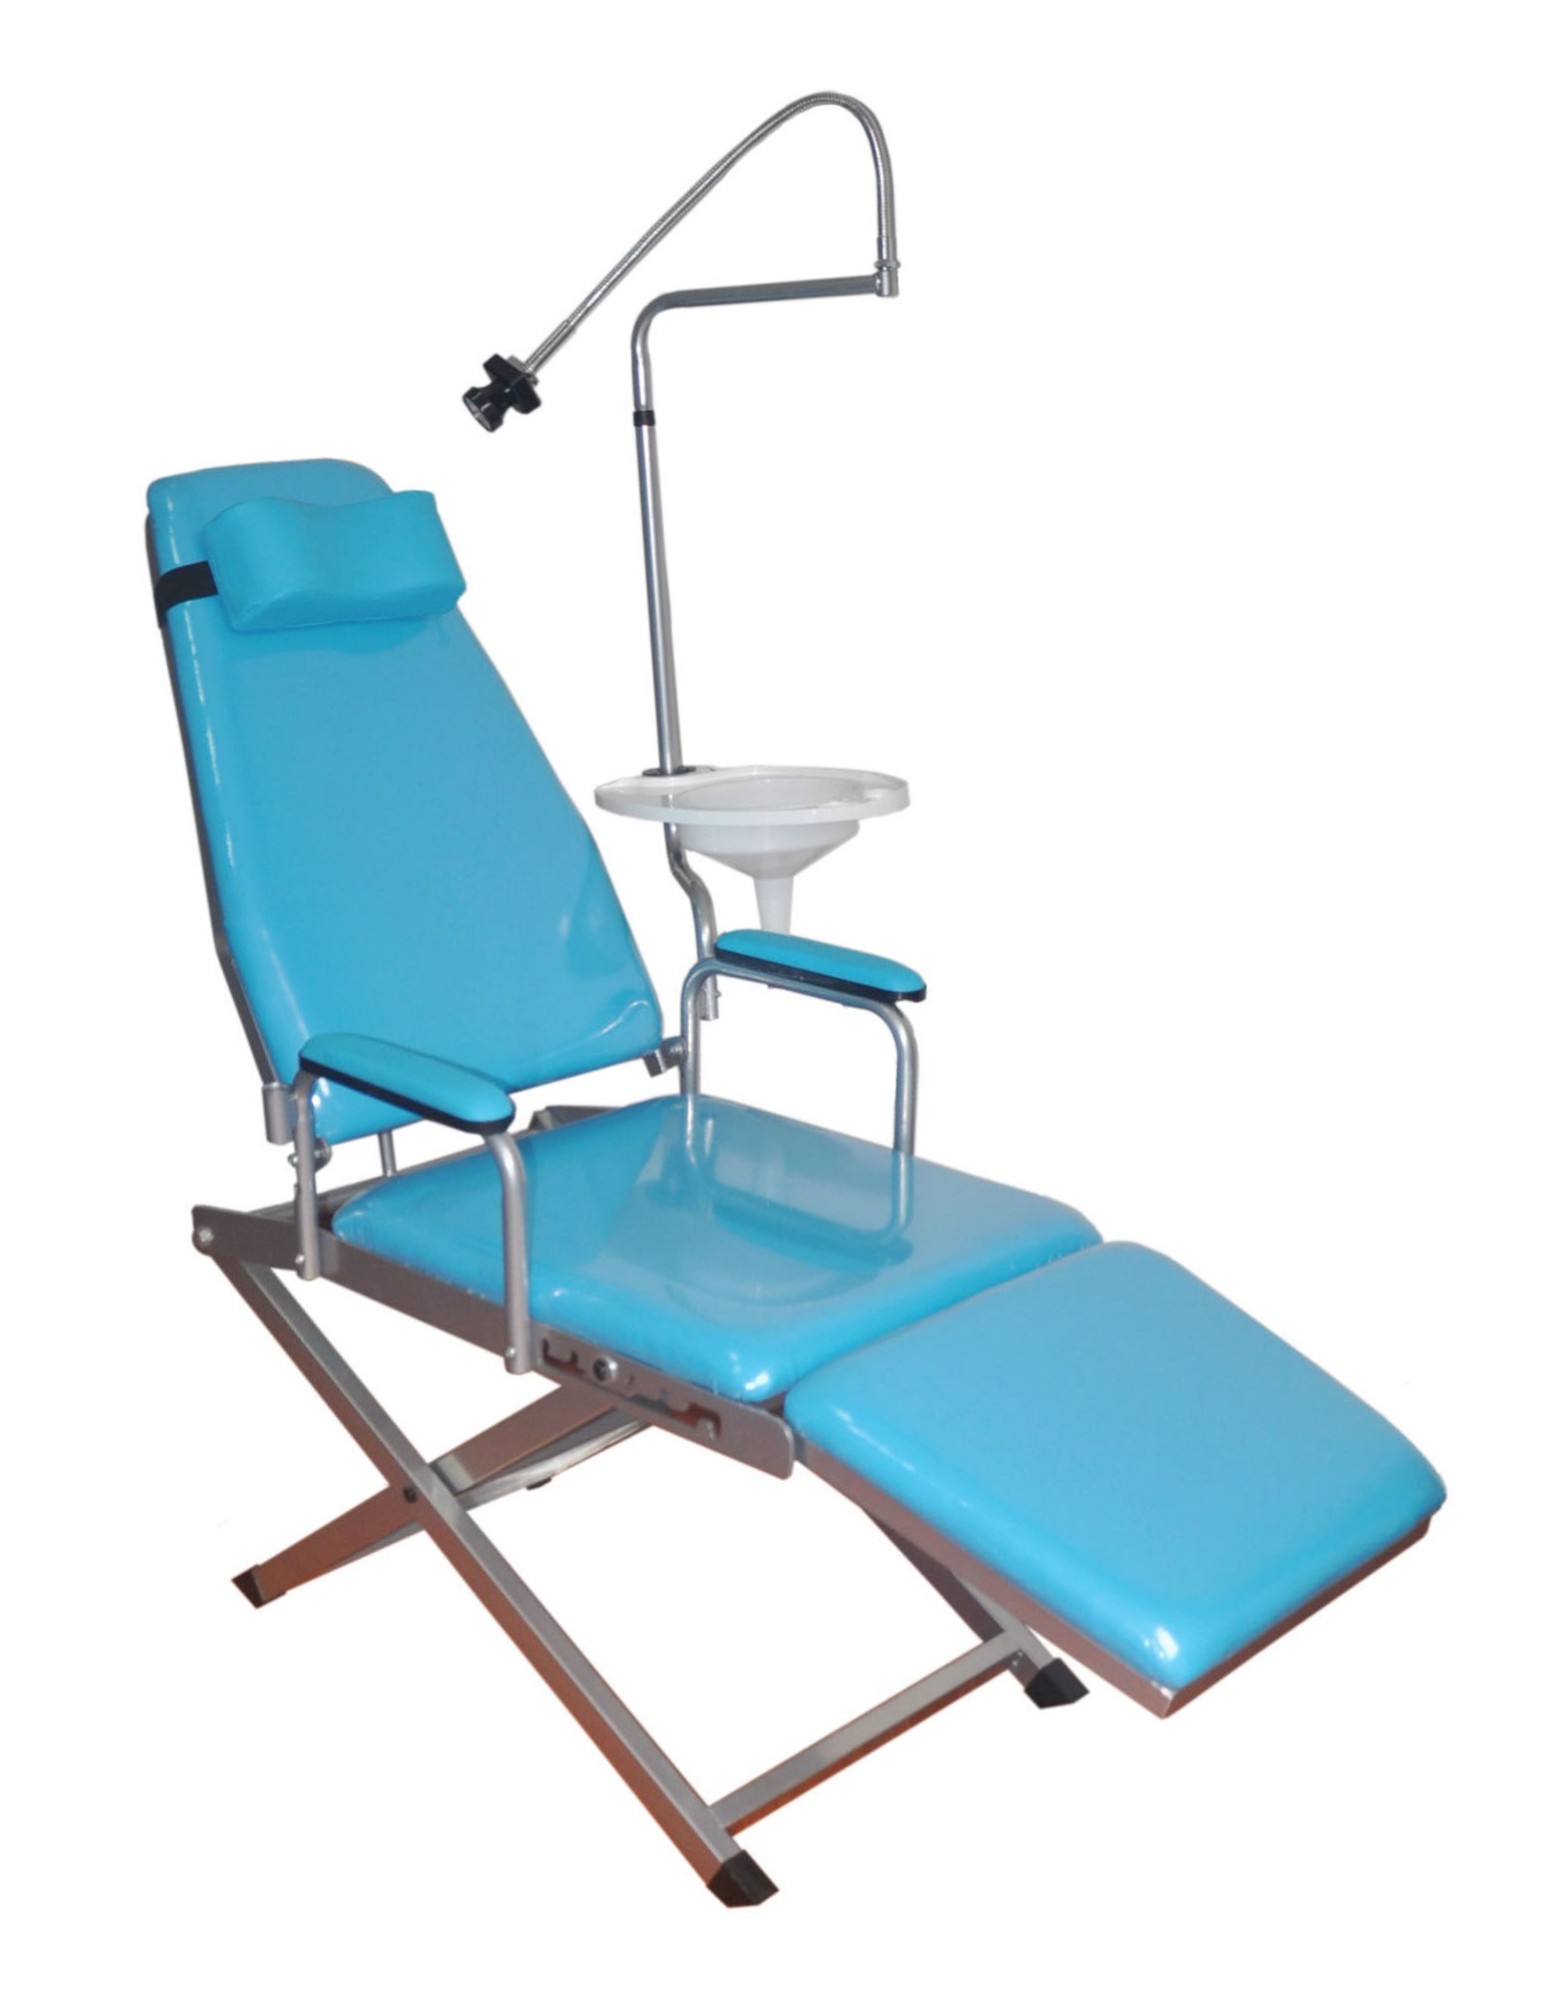 KS-PD136 Portable Dental Chair